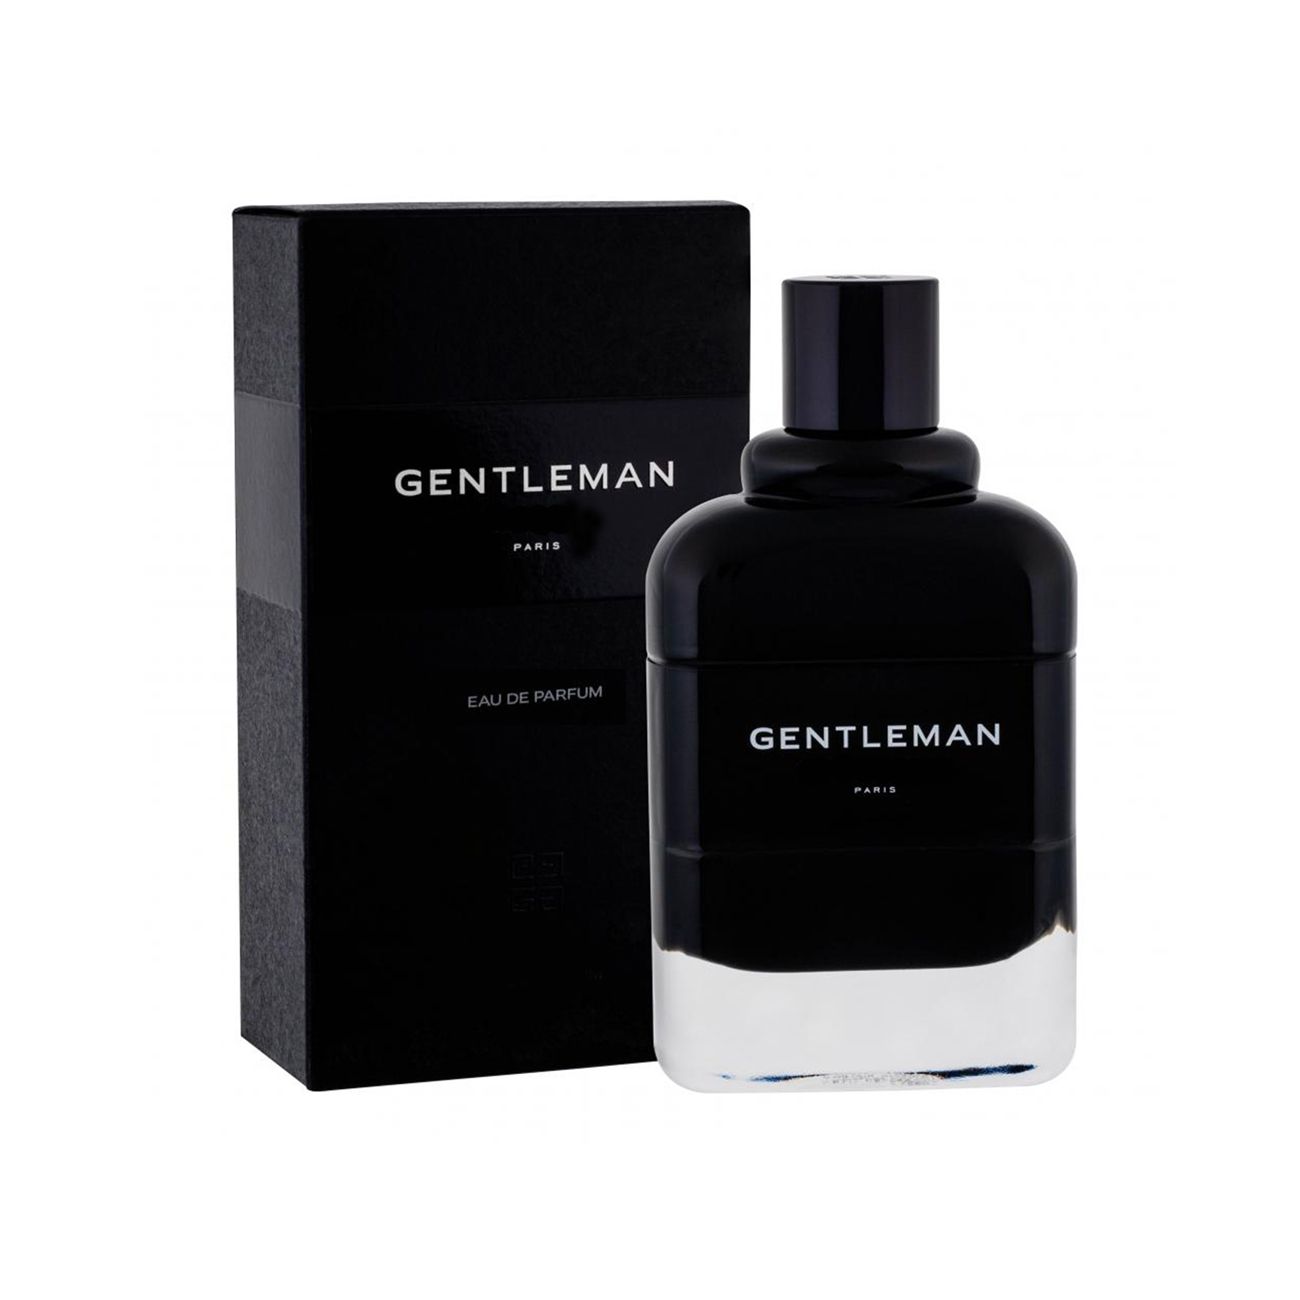 Givenchy society. Givenchy Gentleman EDP 50ml. Givenchy Gentleman Paris Парфюм. Givenchy Gentleman Society Eau de Parfum. Givenchy Gentleman 2018.